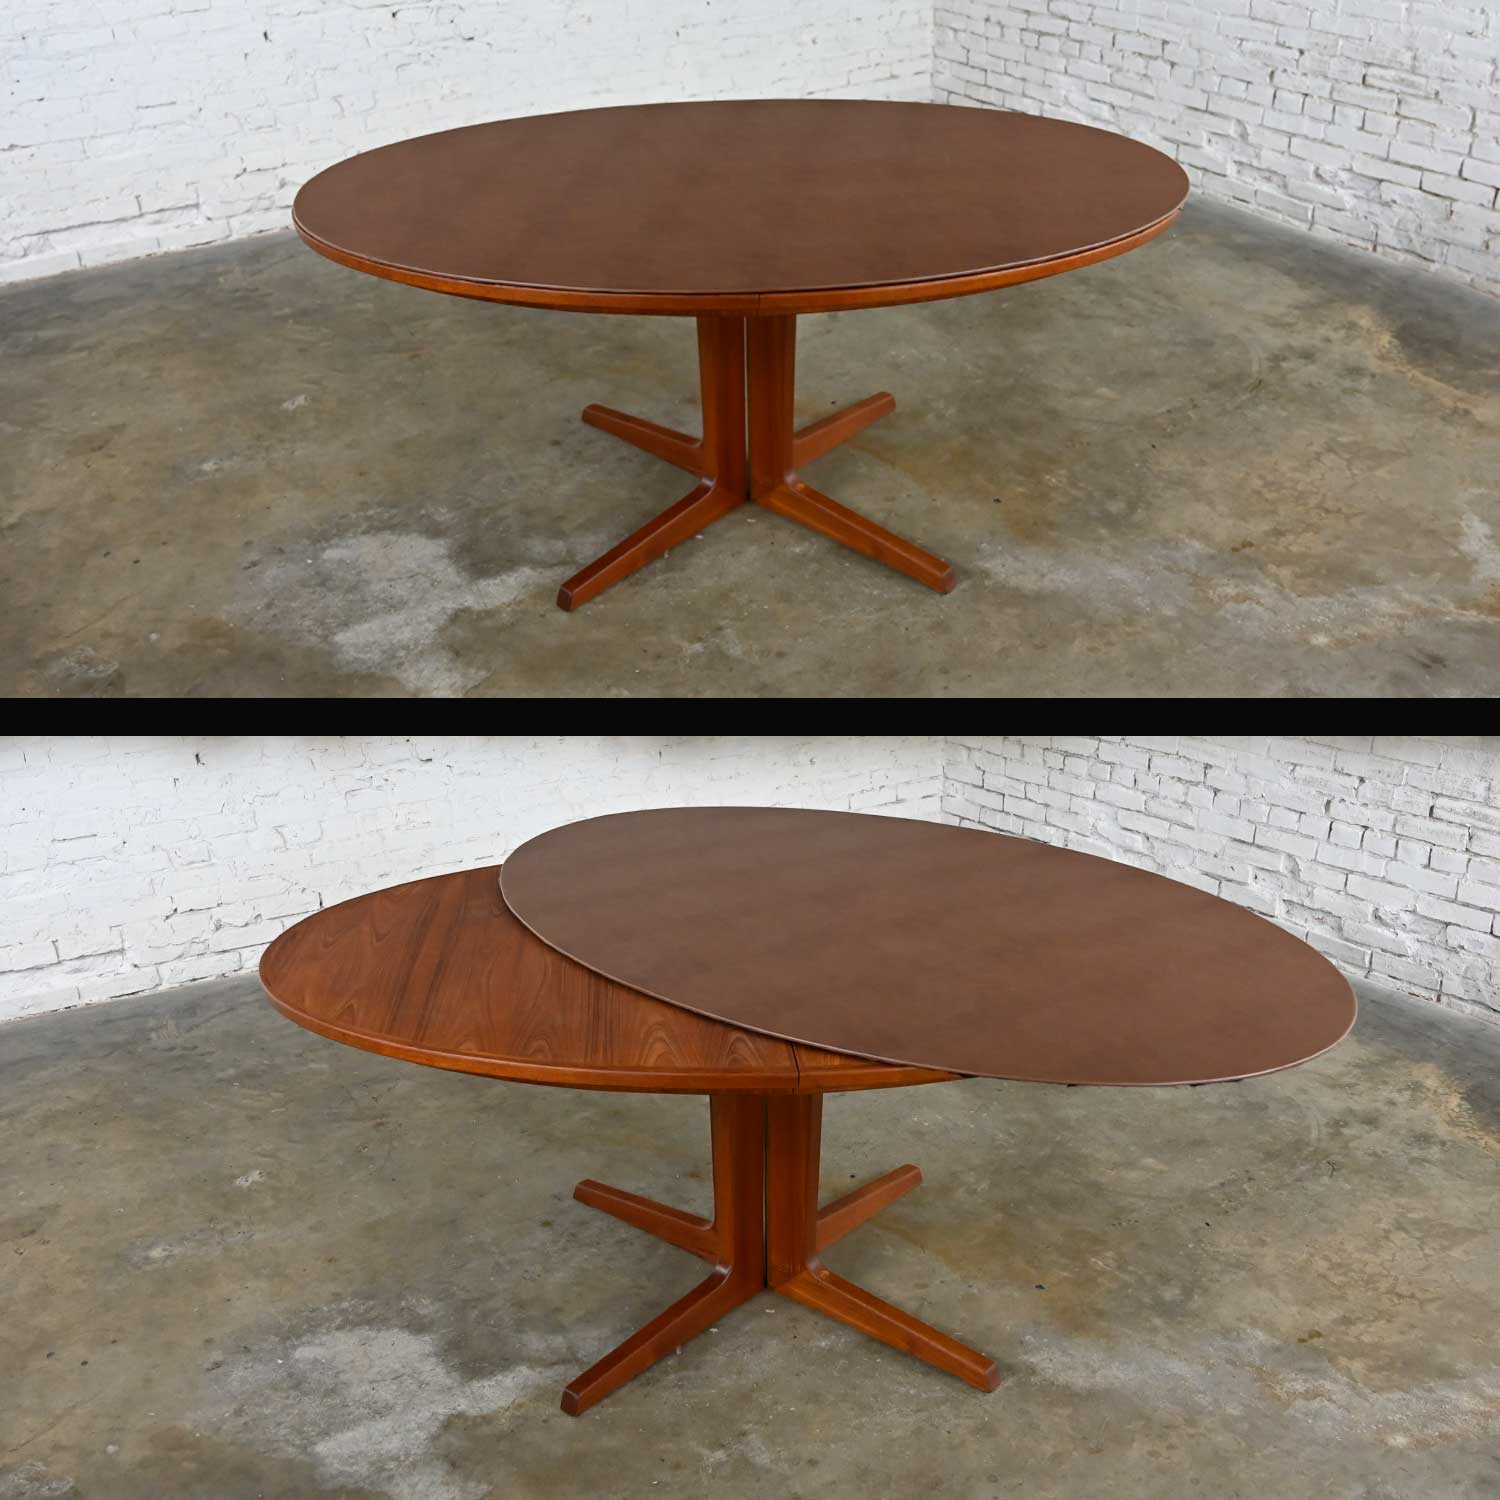 Scandinavian Modern Teak Oval Dining Table #410 Pedestal Base Attributed to Bernhard Pedersen & Son 2 Leaves